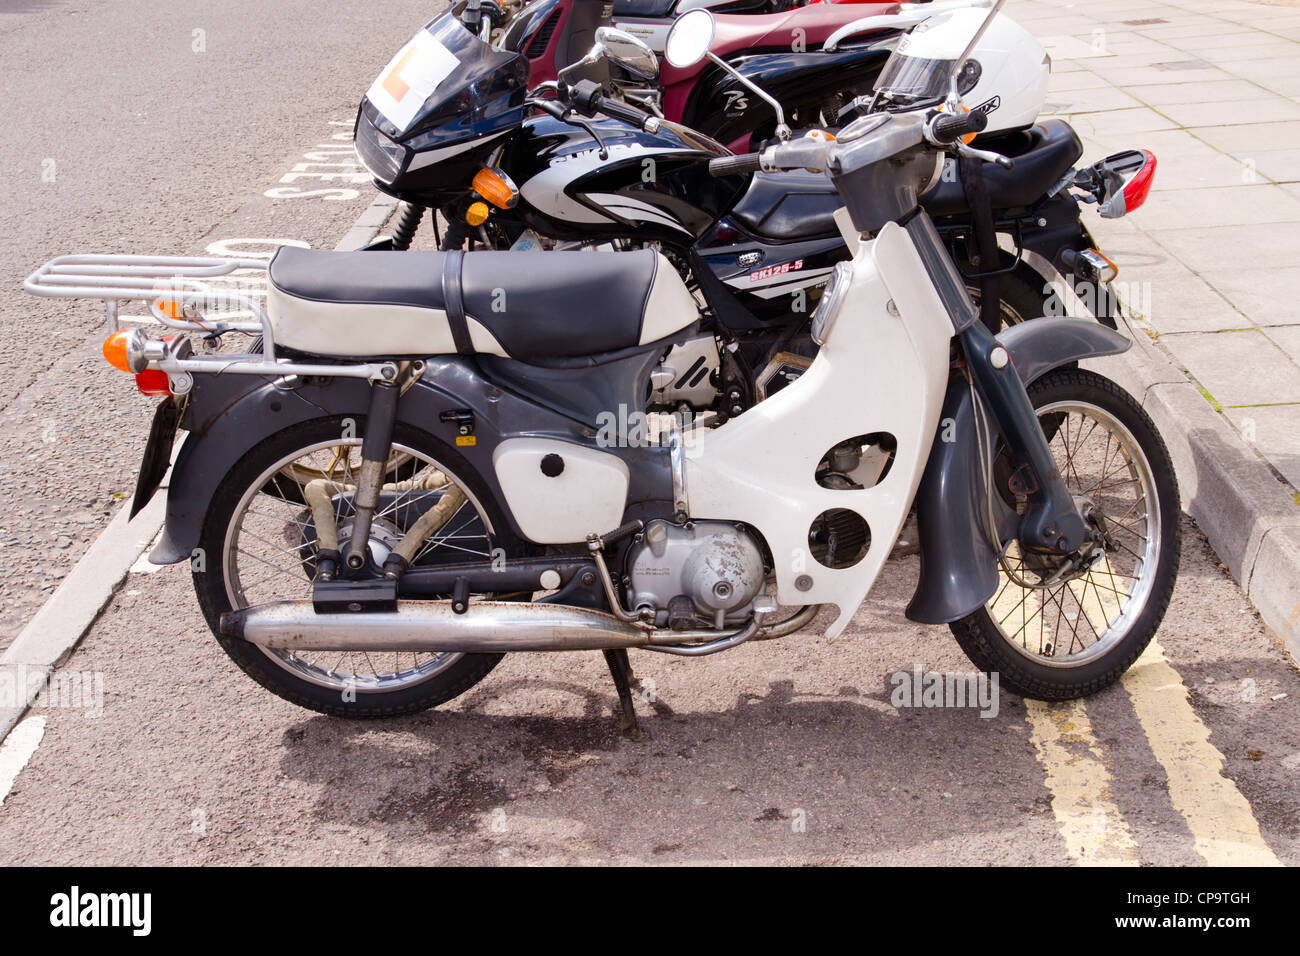 Motocicleta Honda Cub C90 Fotografía de stock - Alamy